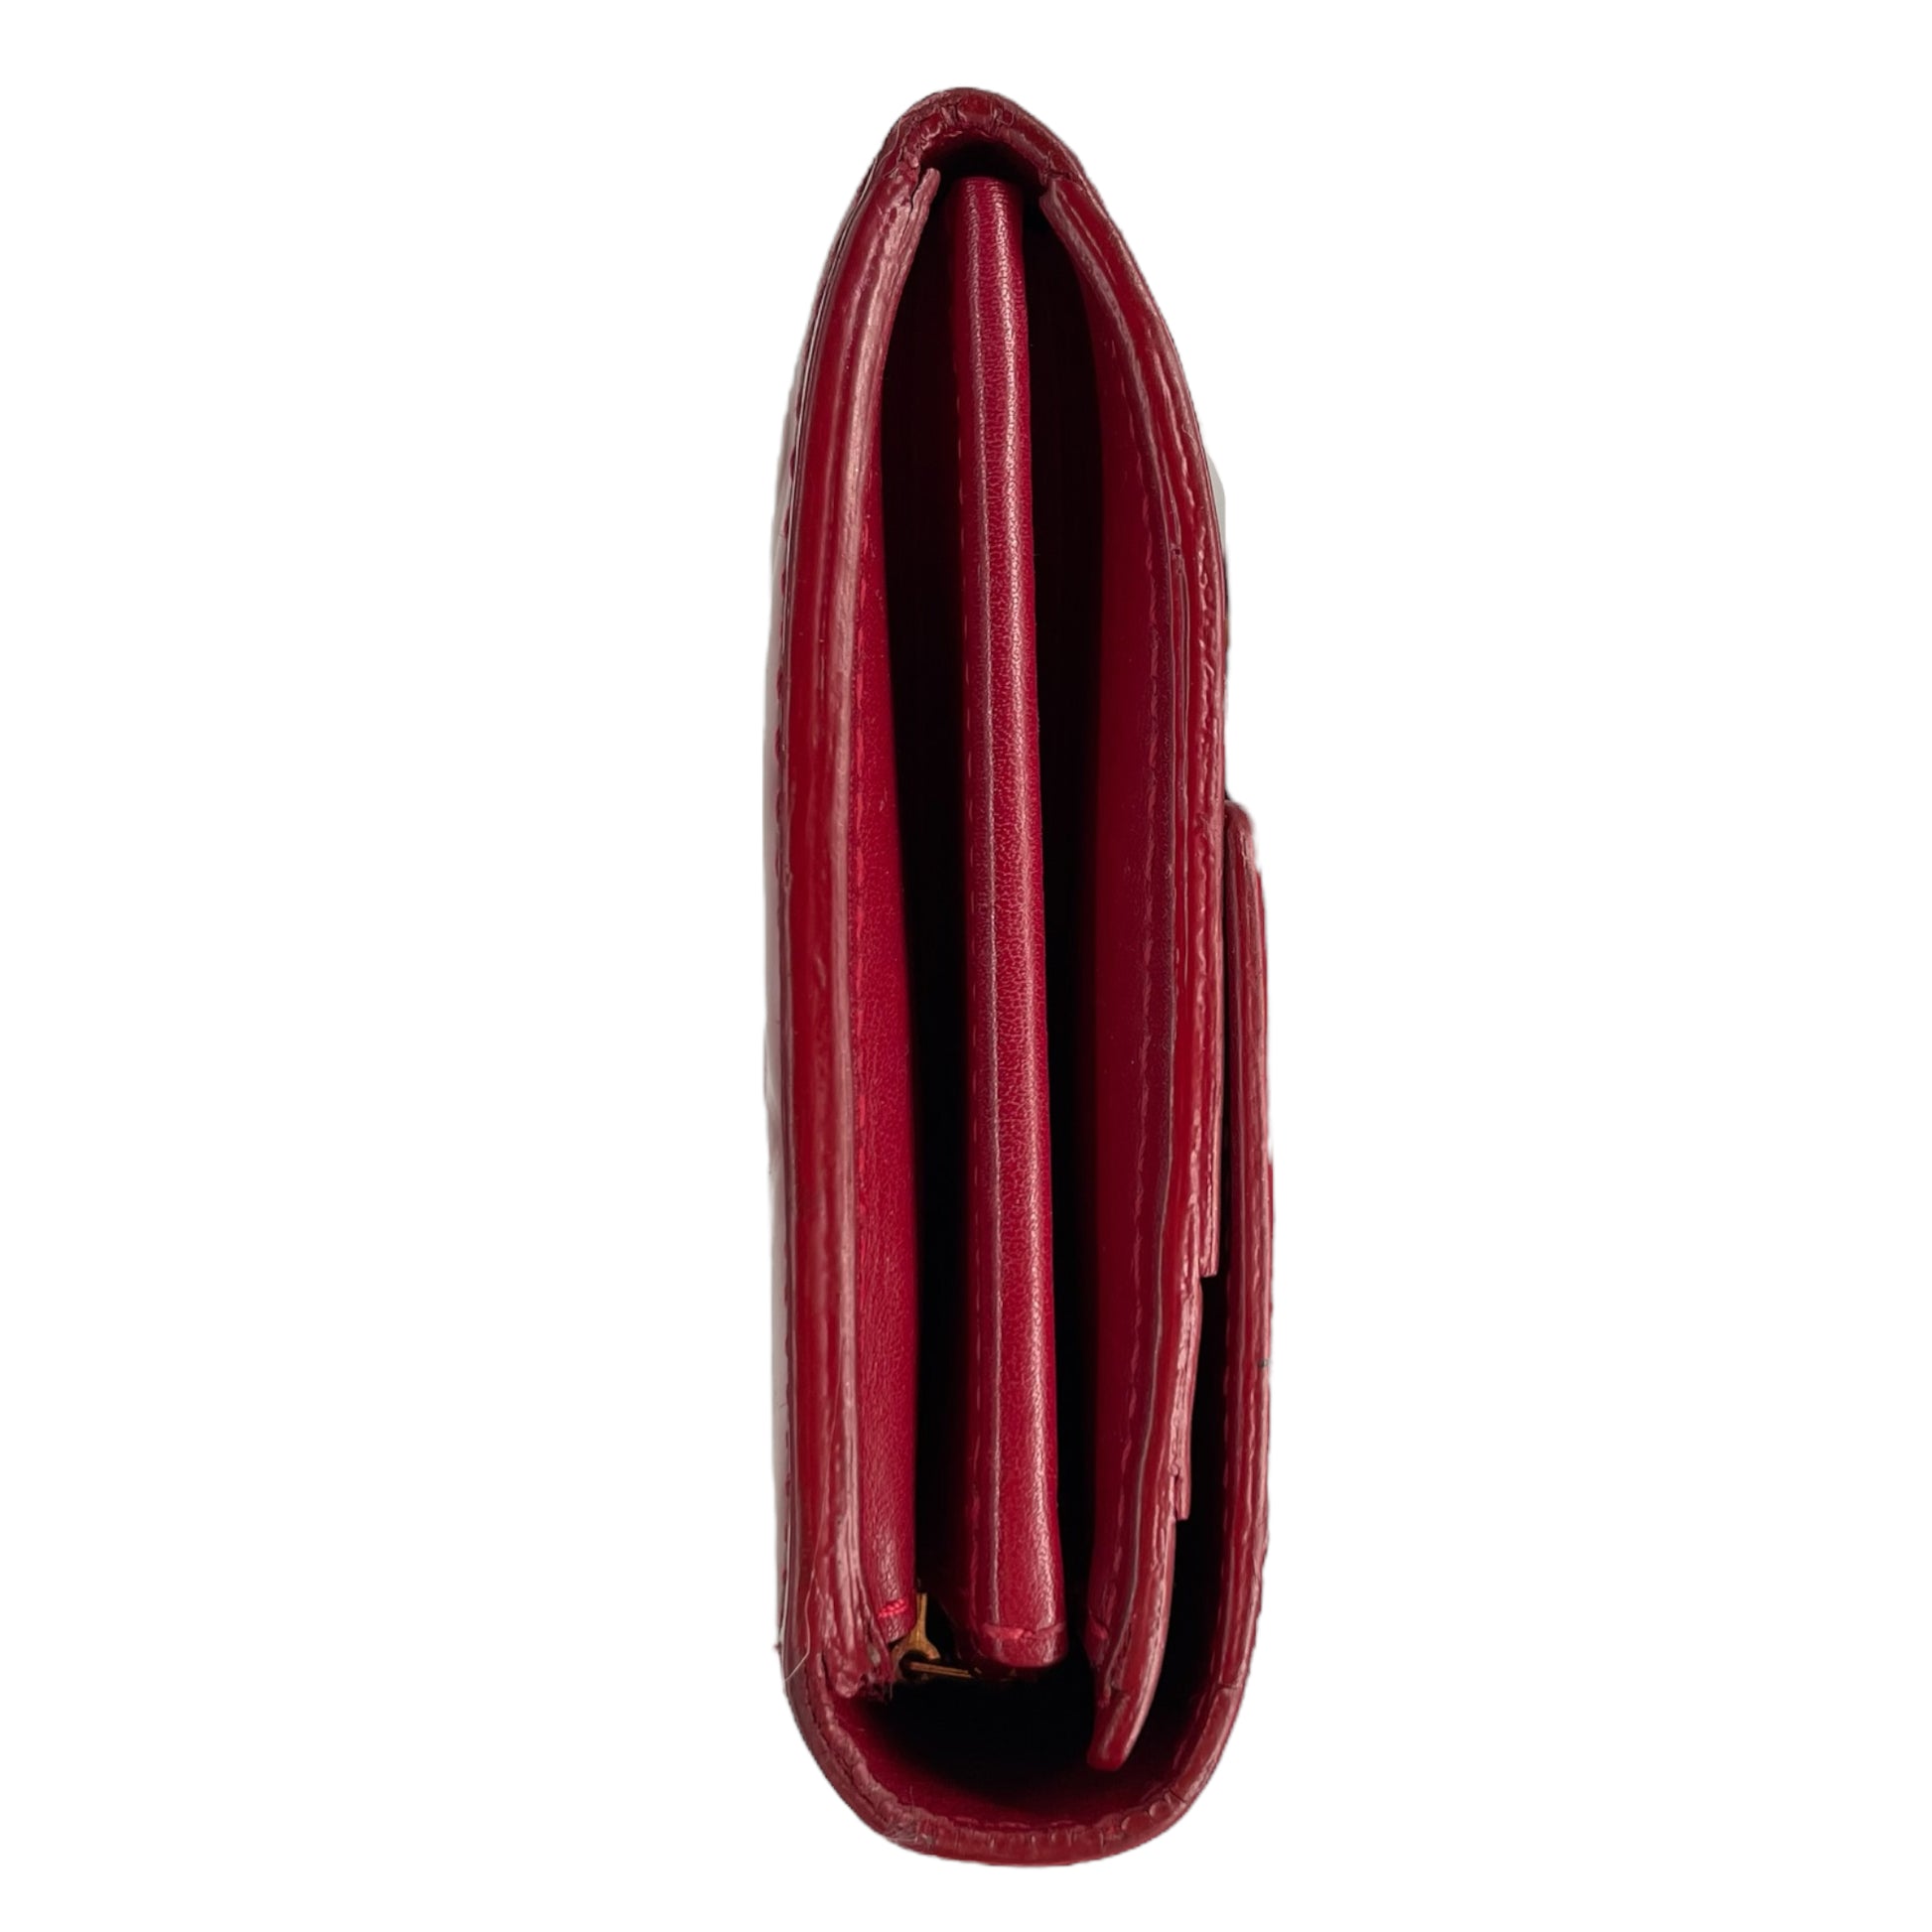 LOUIS VUITTON Sarah Monogram Vernis Leather Wallet Red